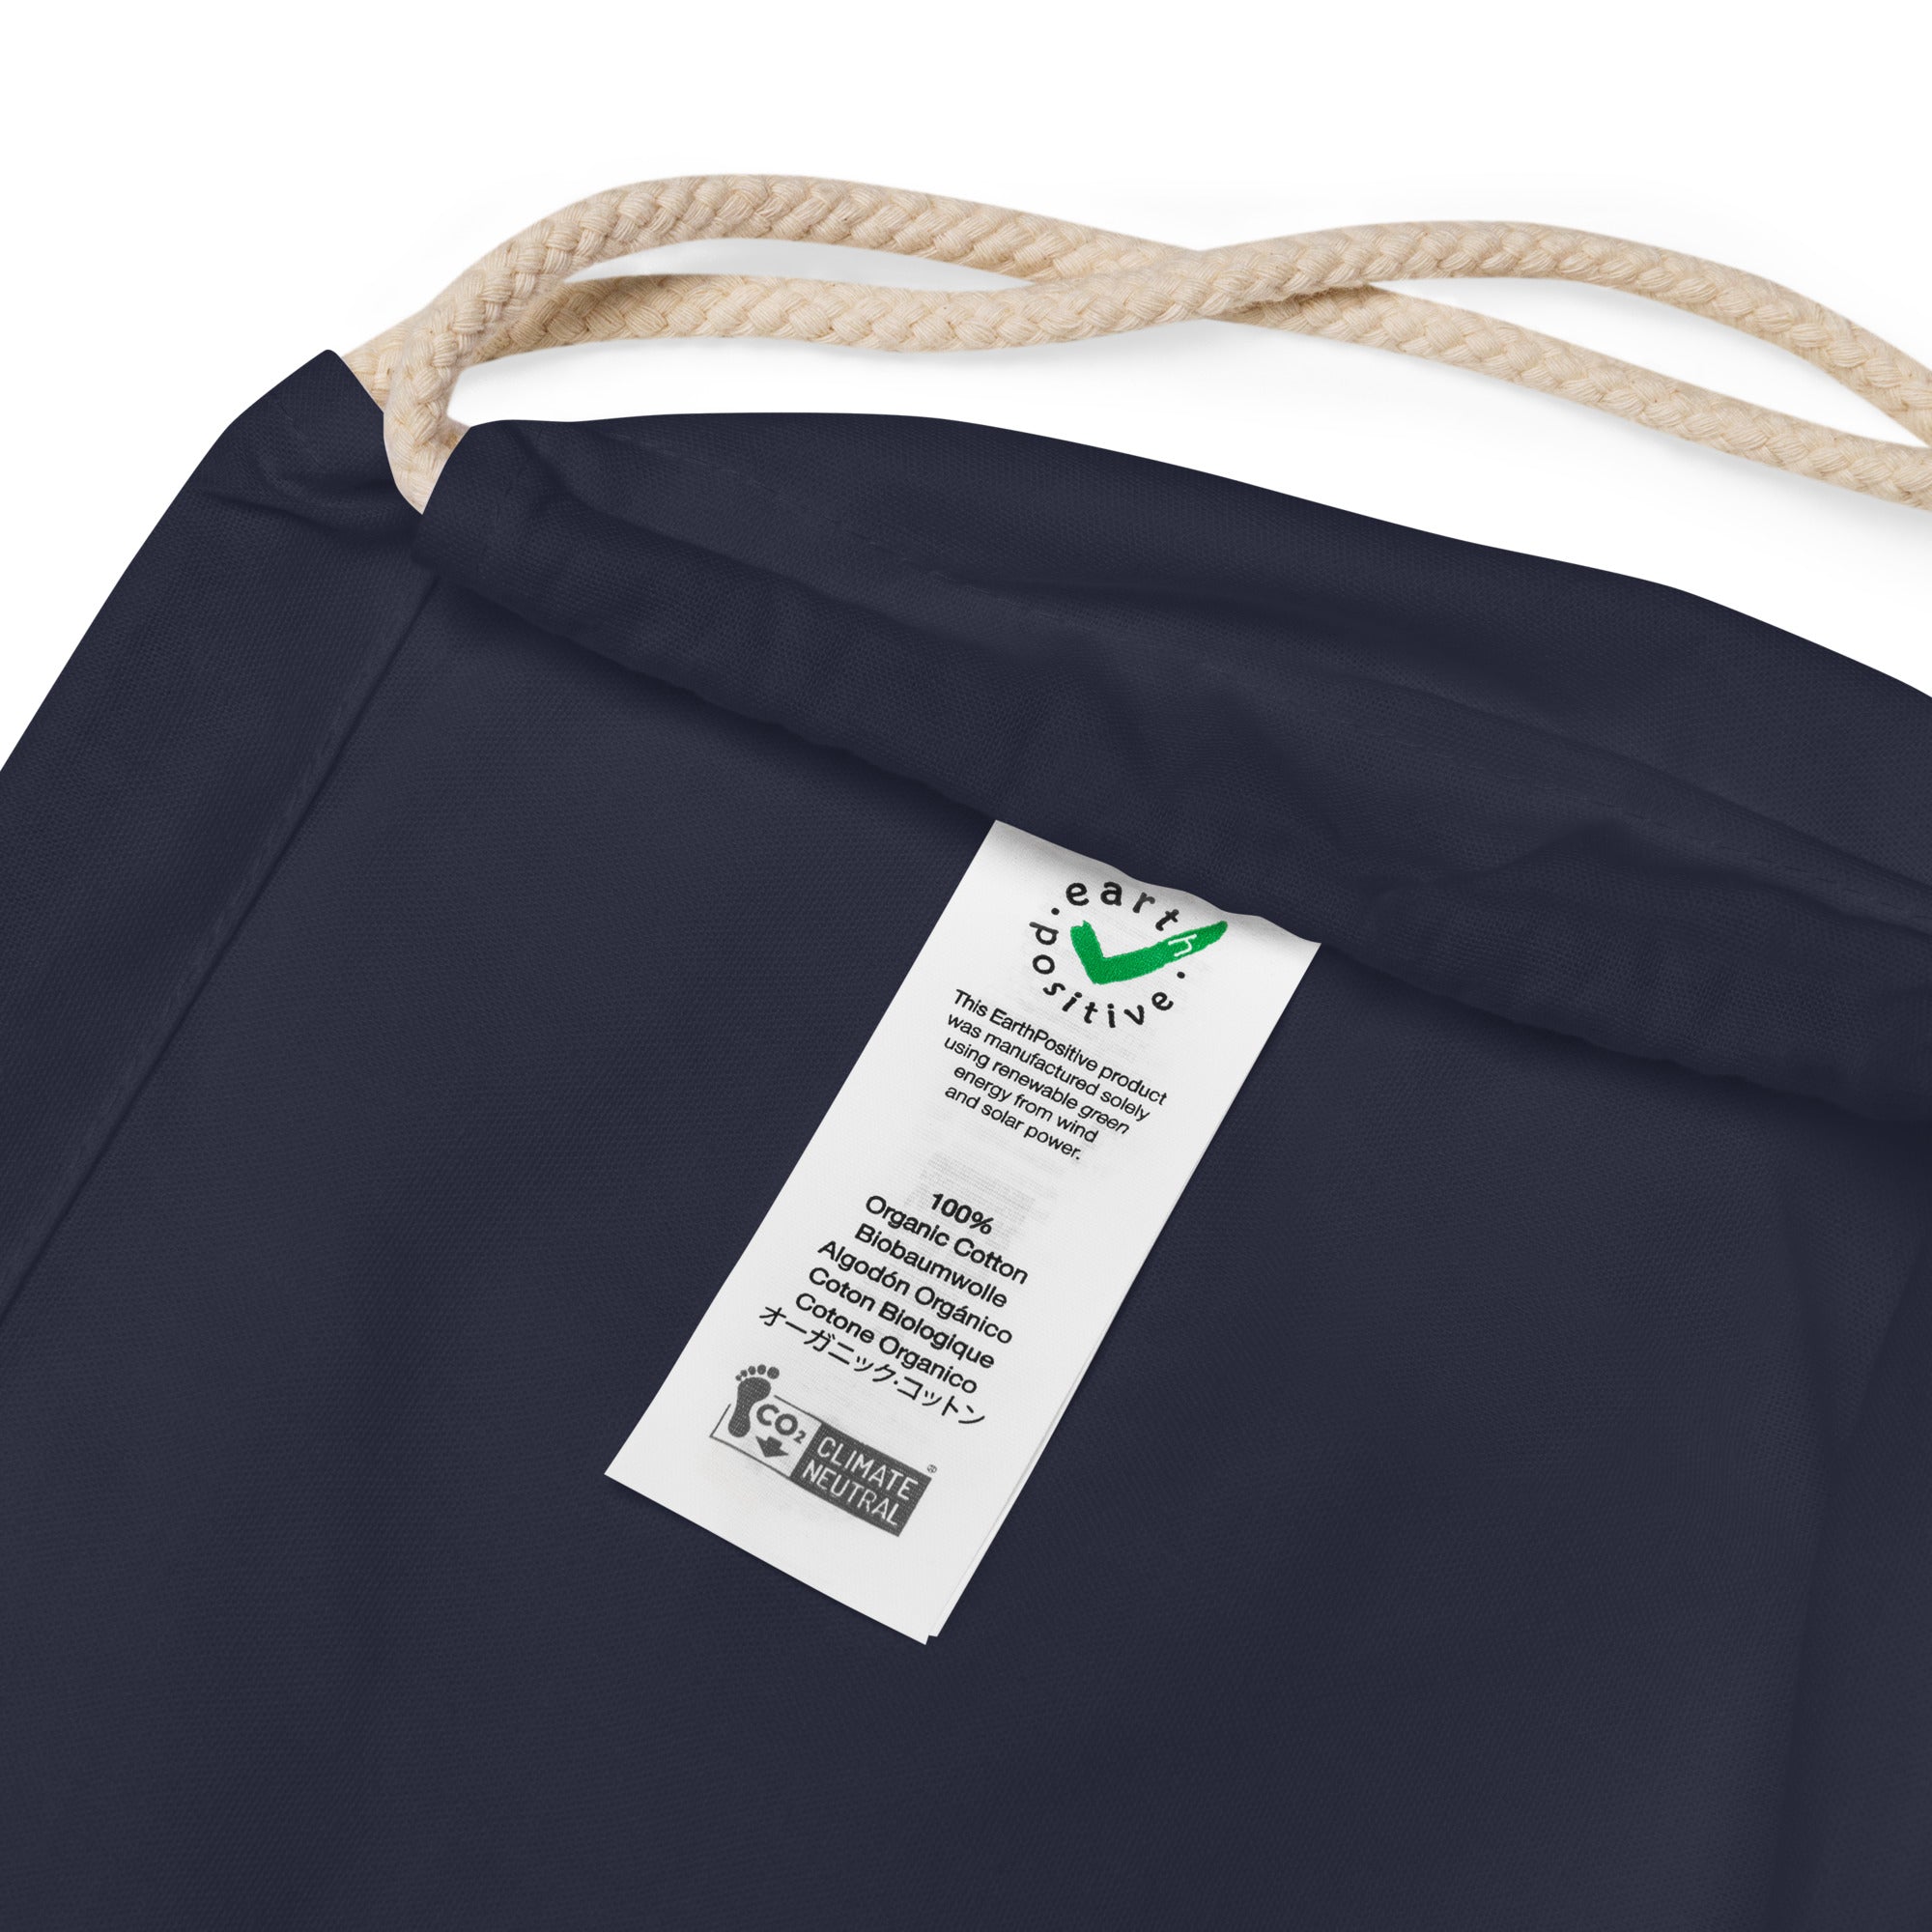 The Traveller Organic cotton drawstring bag